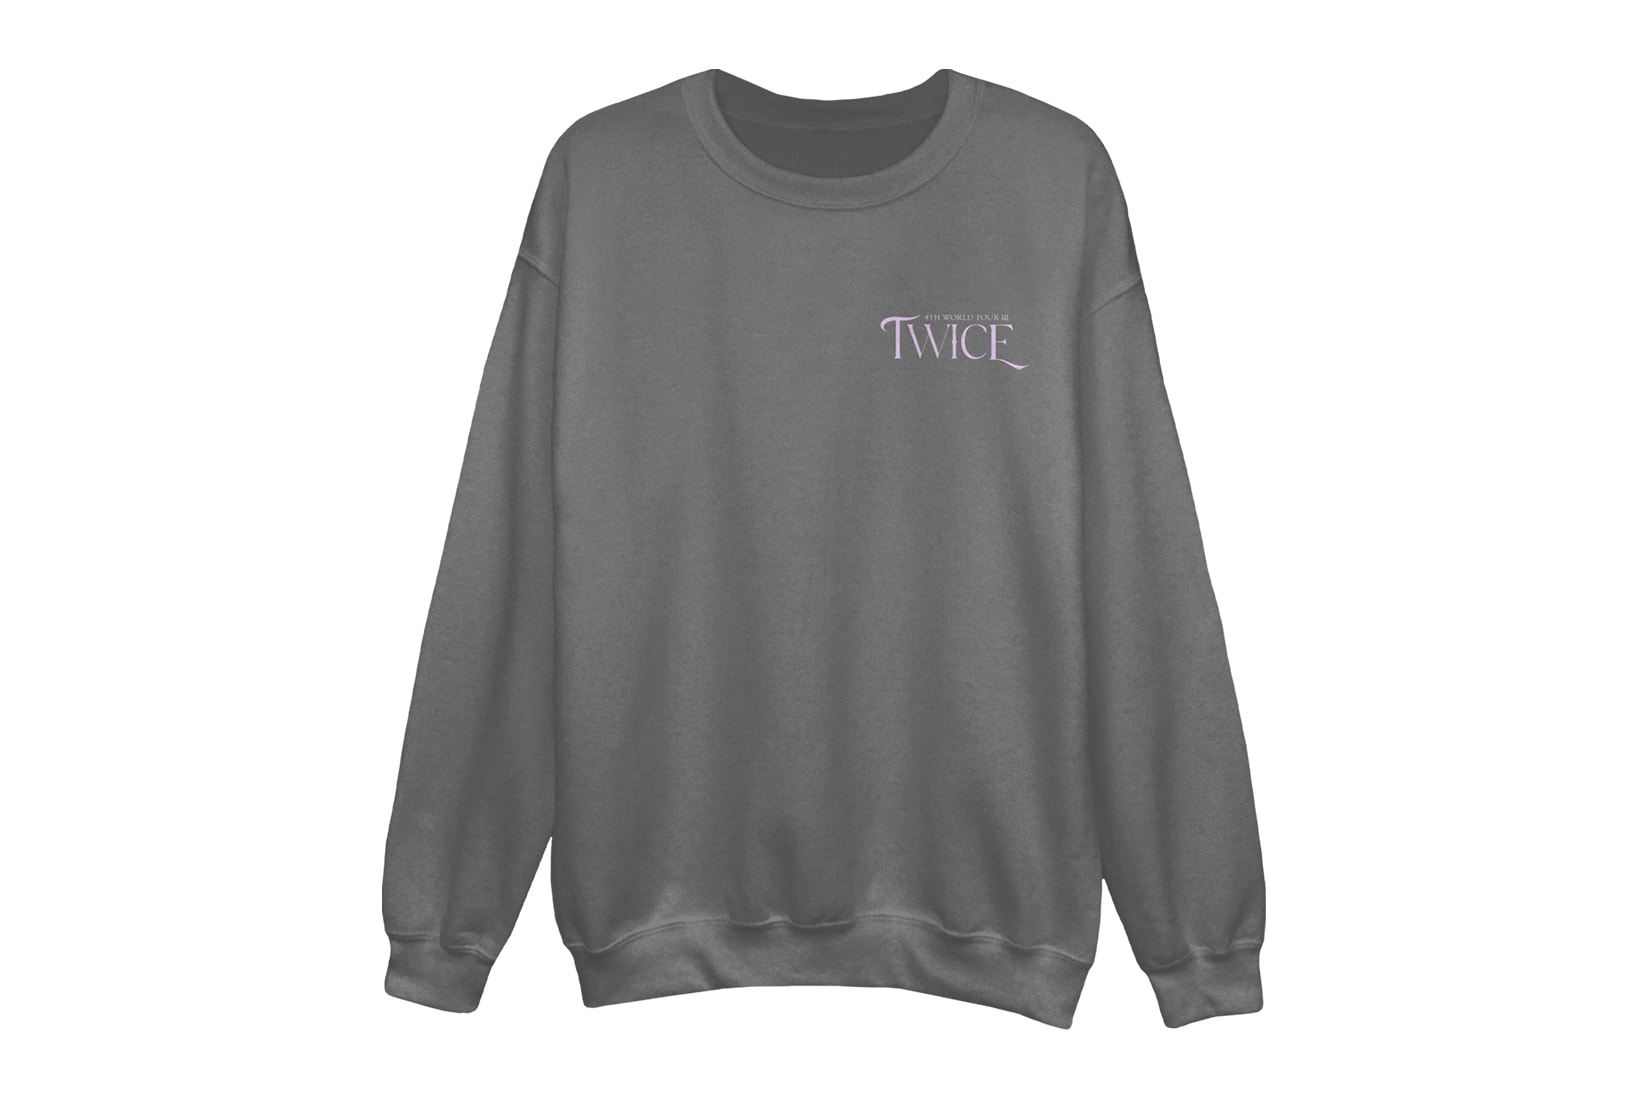 TWICE 4th World Tour Collection Merchandise Outerwear Accessories K-pop Sweatshirt Gray Front